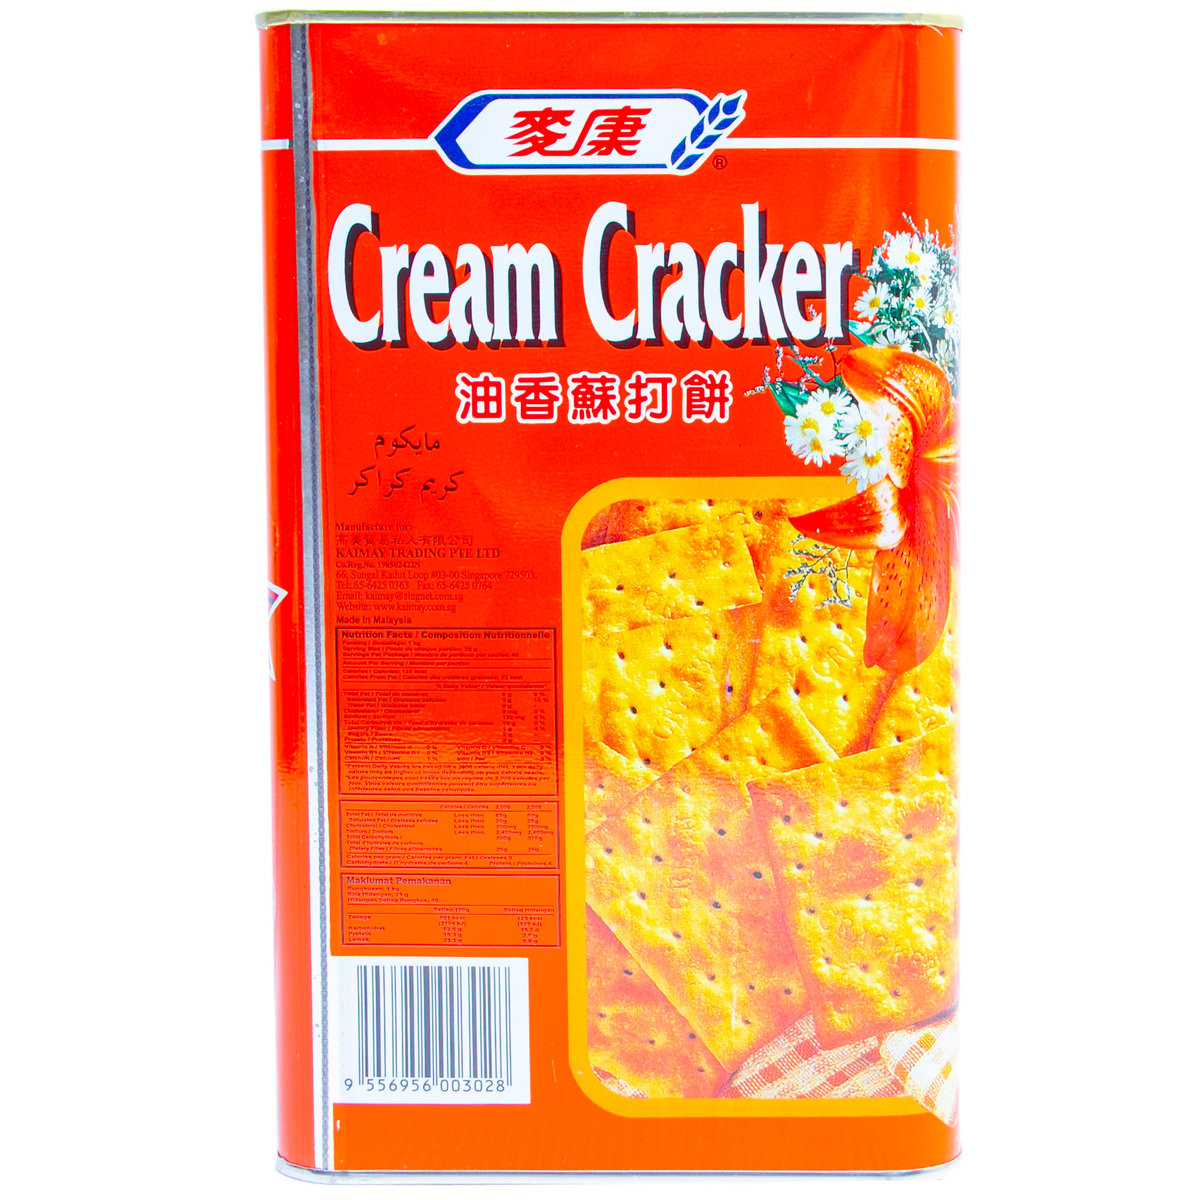 Maikom Cream Cracker, 1 kg